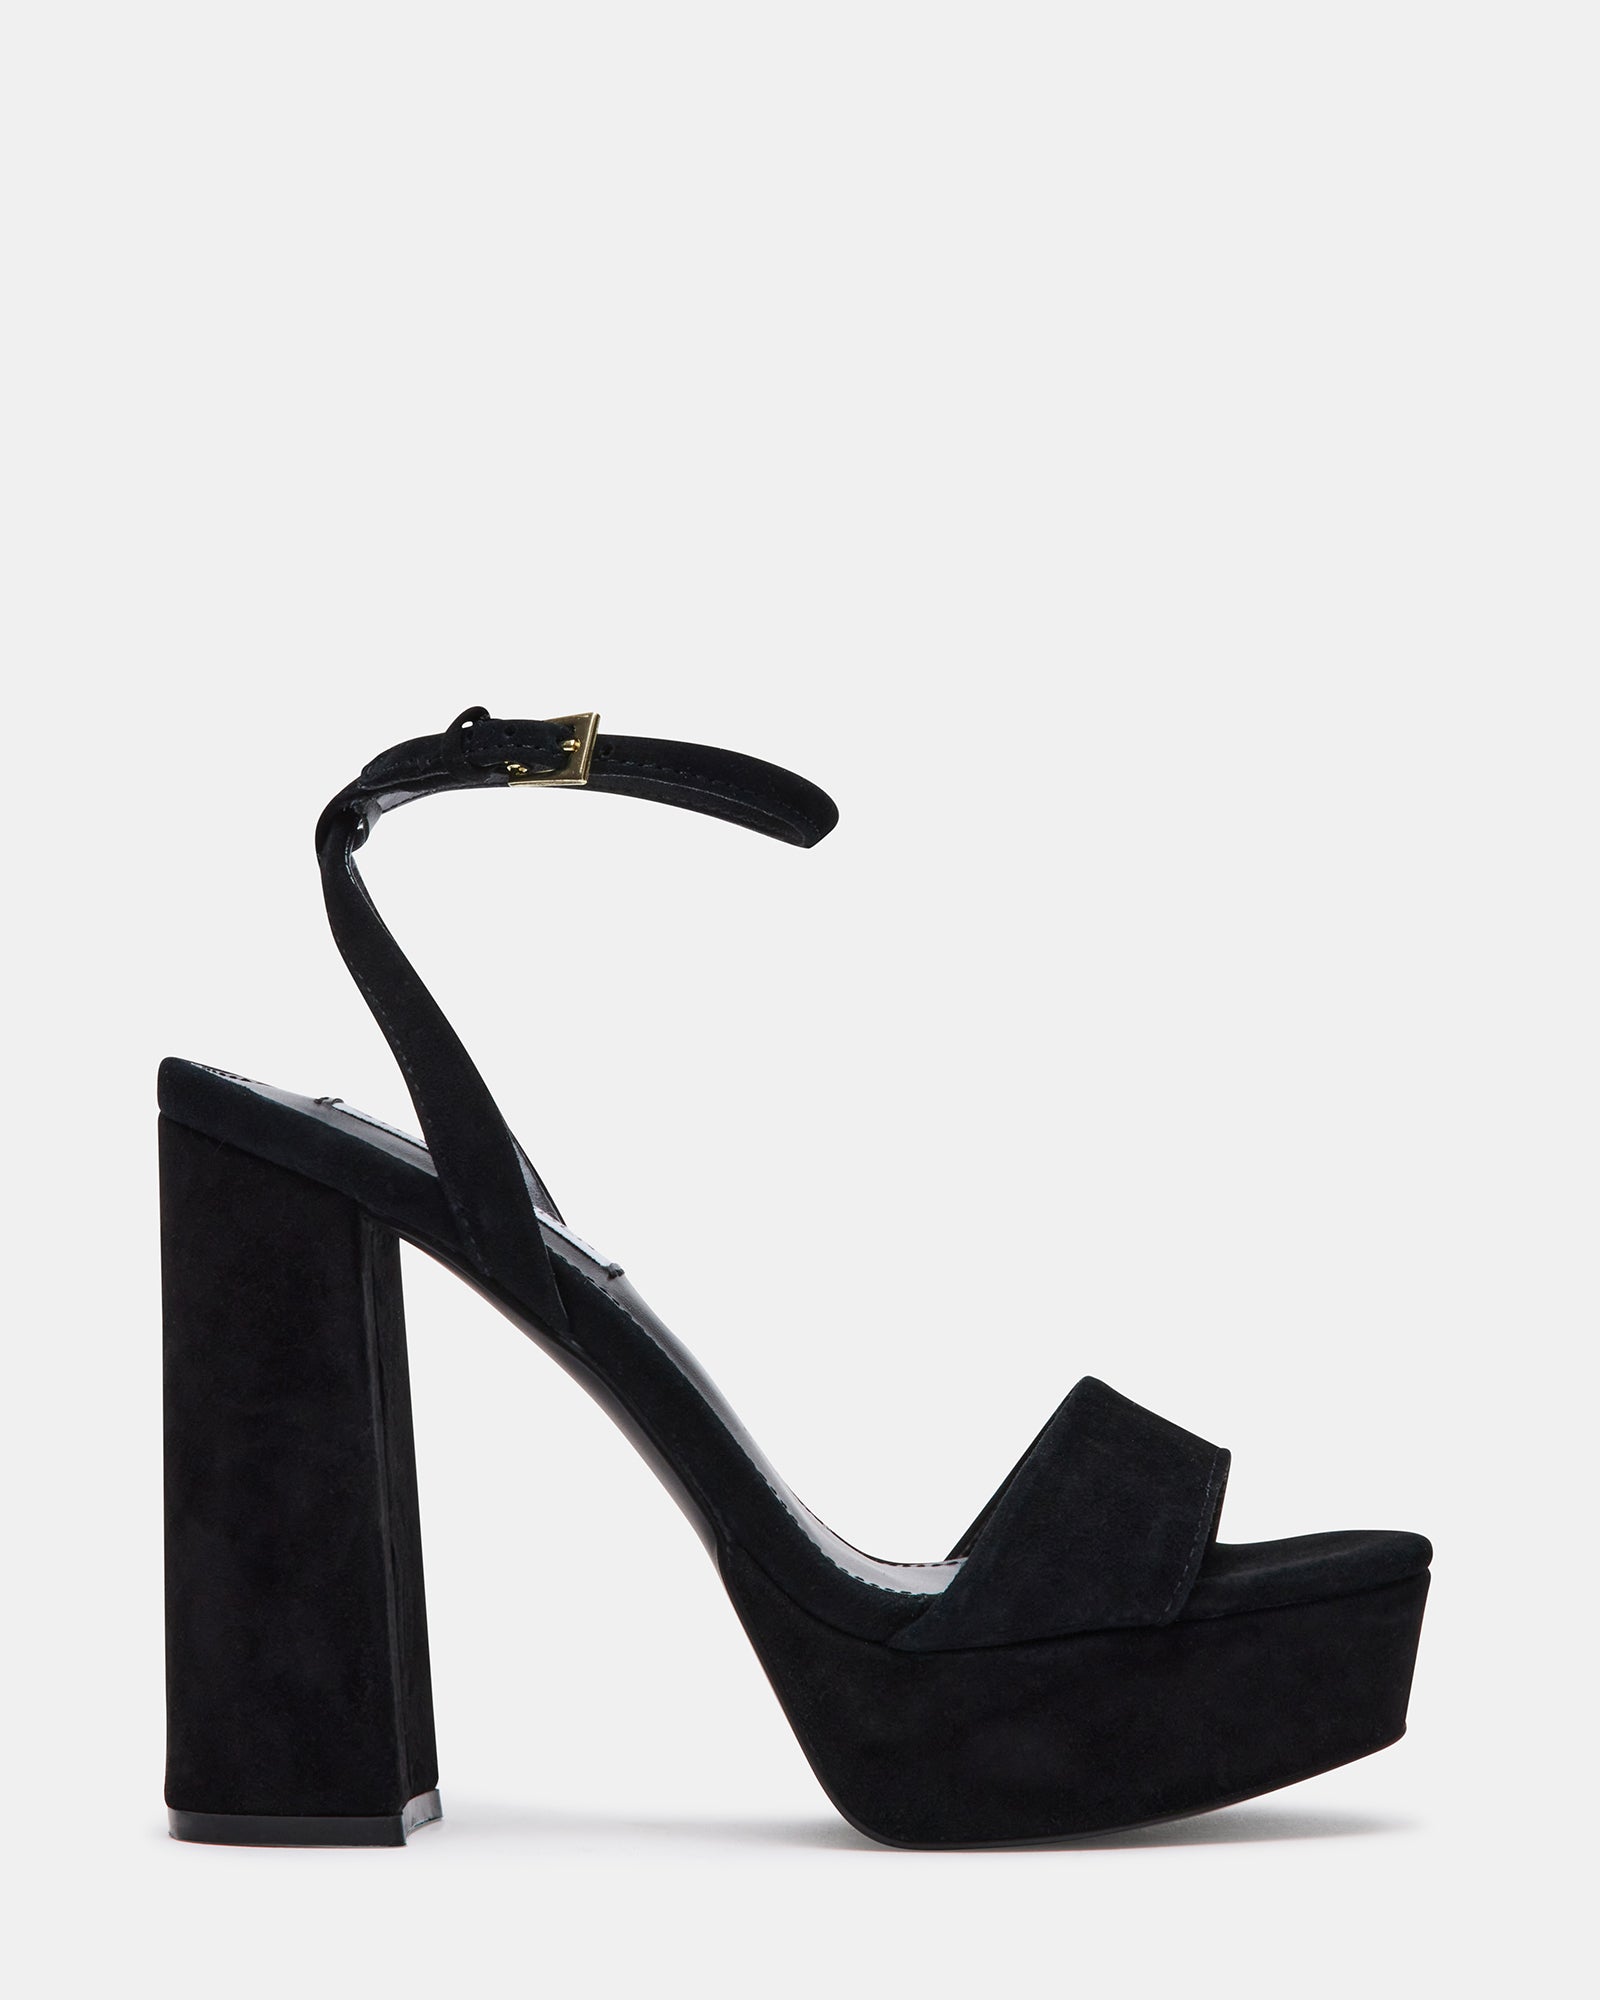 Black Velvet Platform Court Shoes Size 5 - Heel Size Approx 6 Inches | eBay